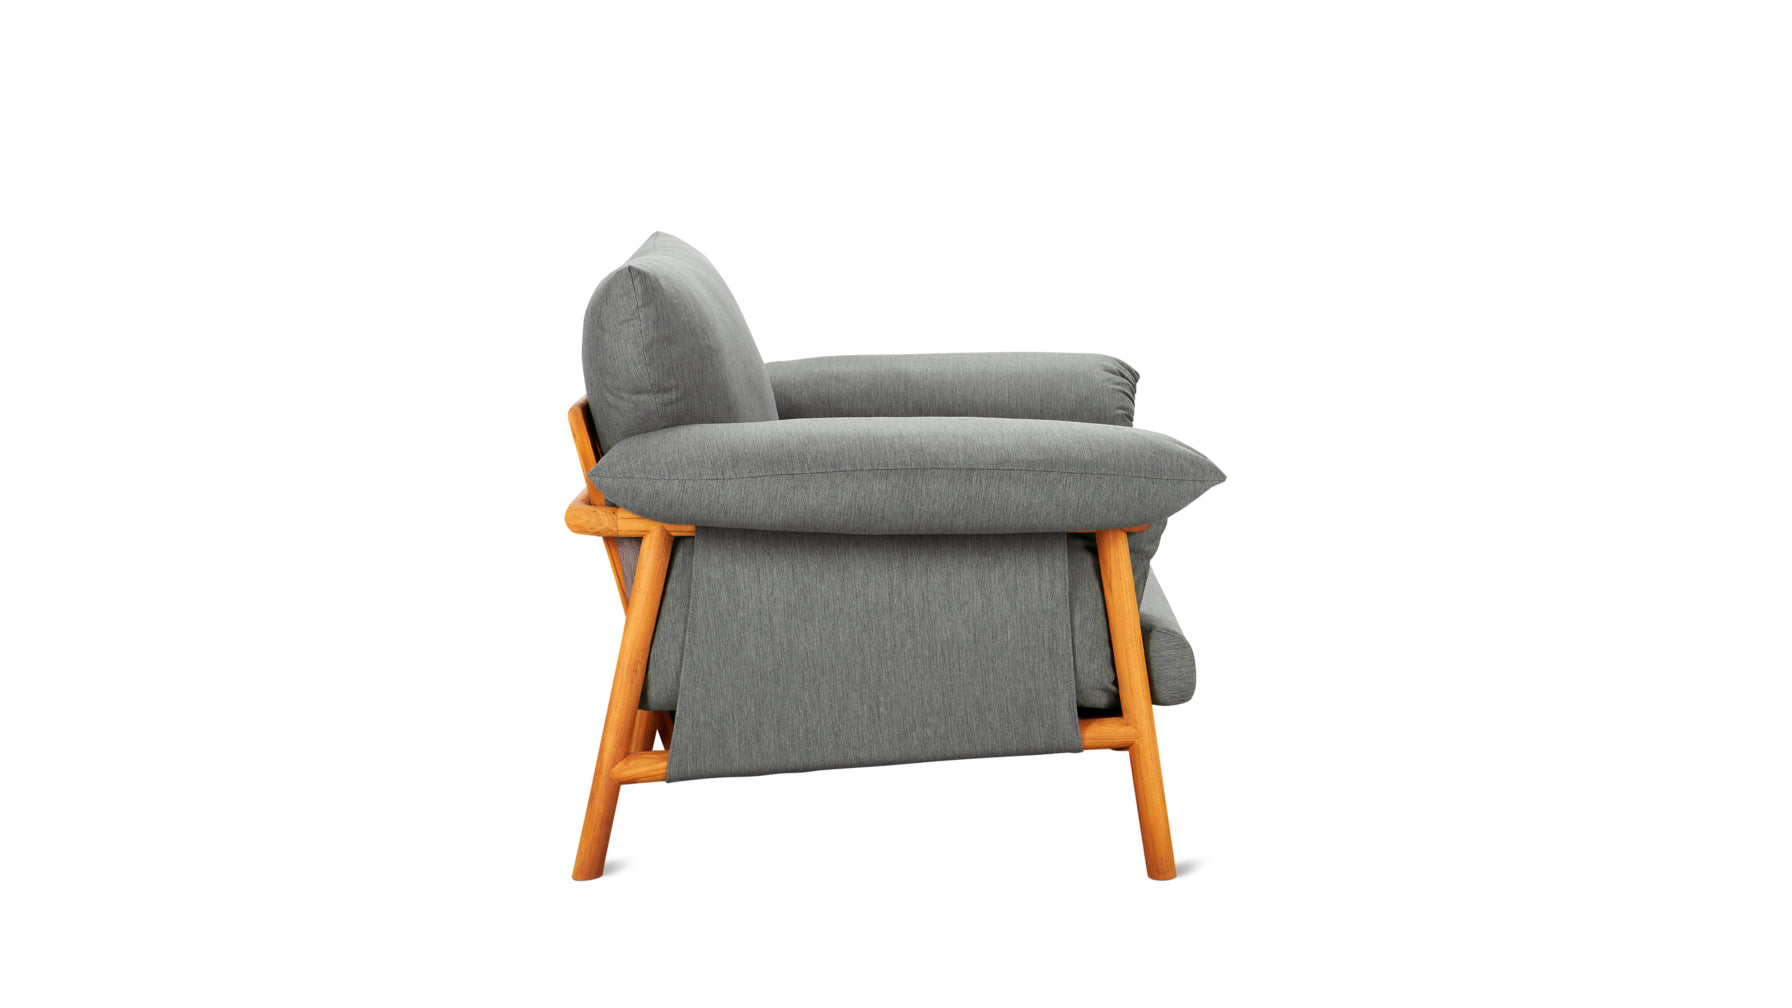 Pillow Talk Outdoor Lounge Chair, Pepper - Image 3